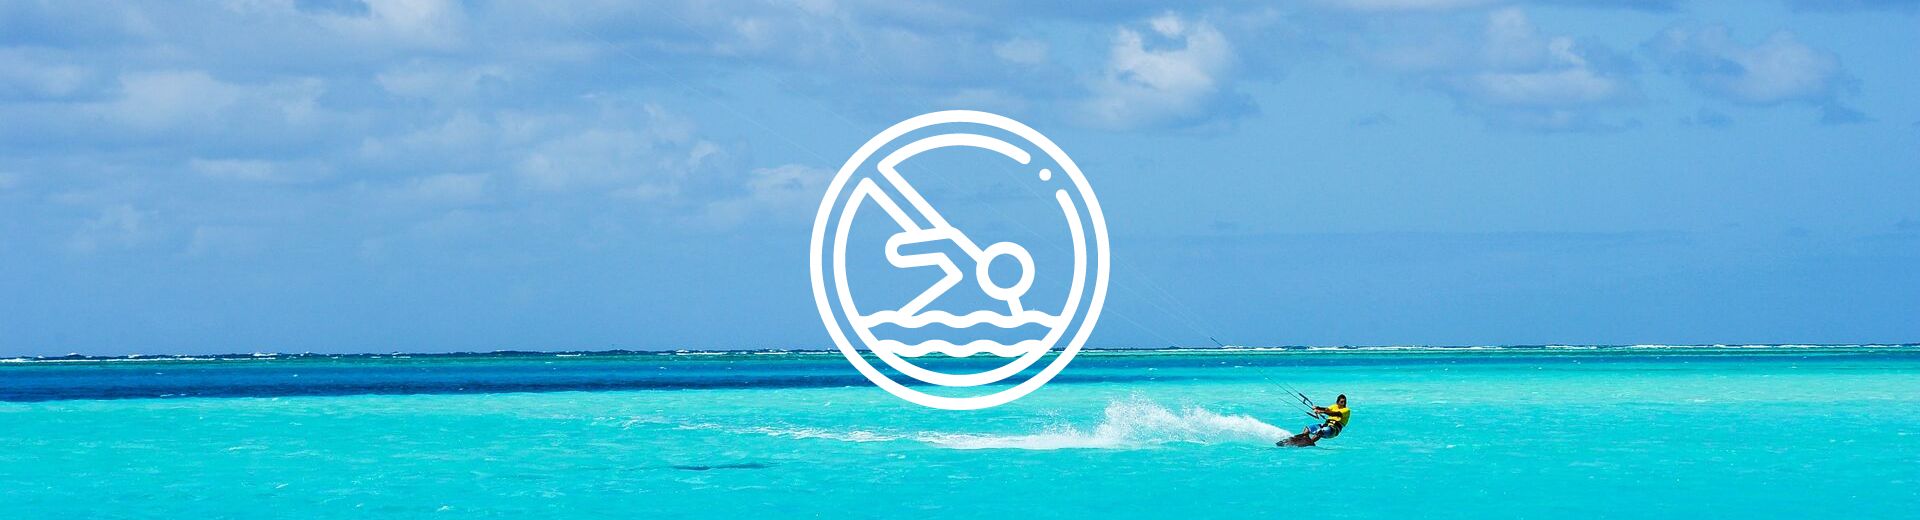 Water sports activities ban in Noumea